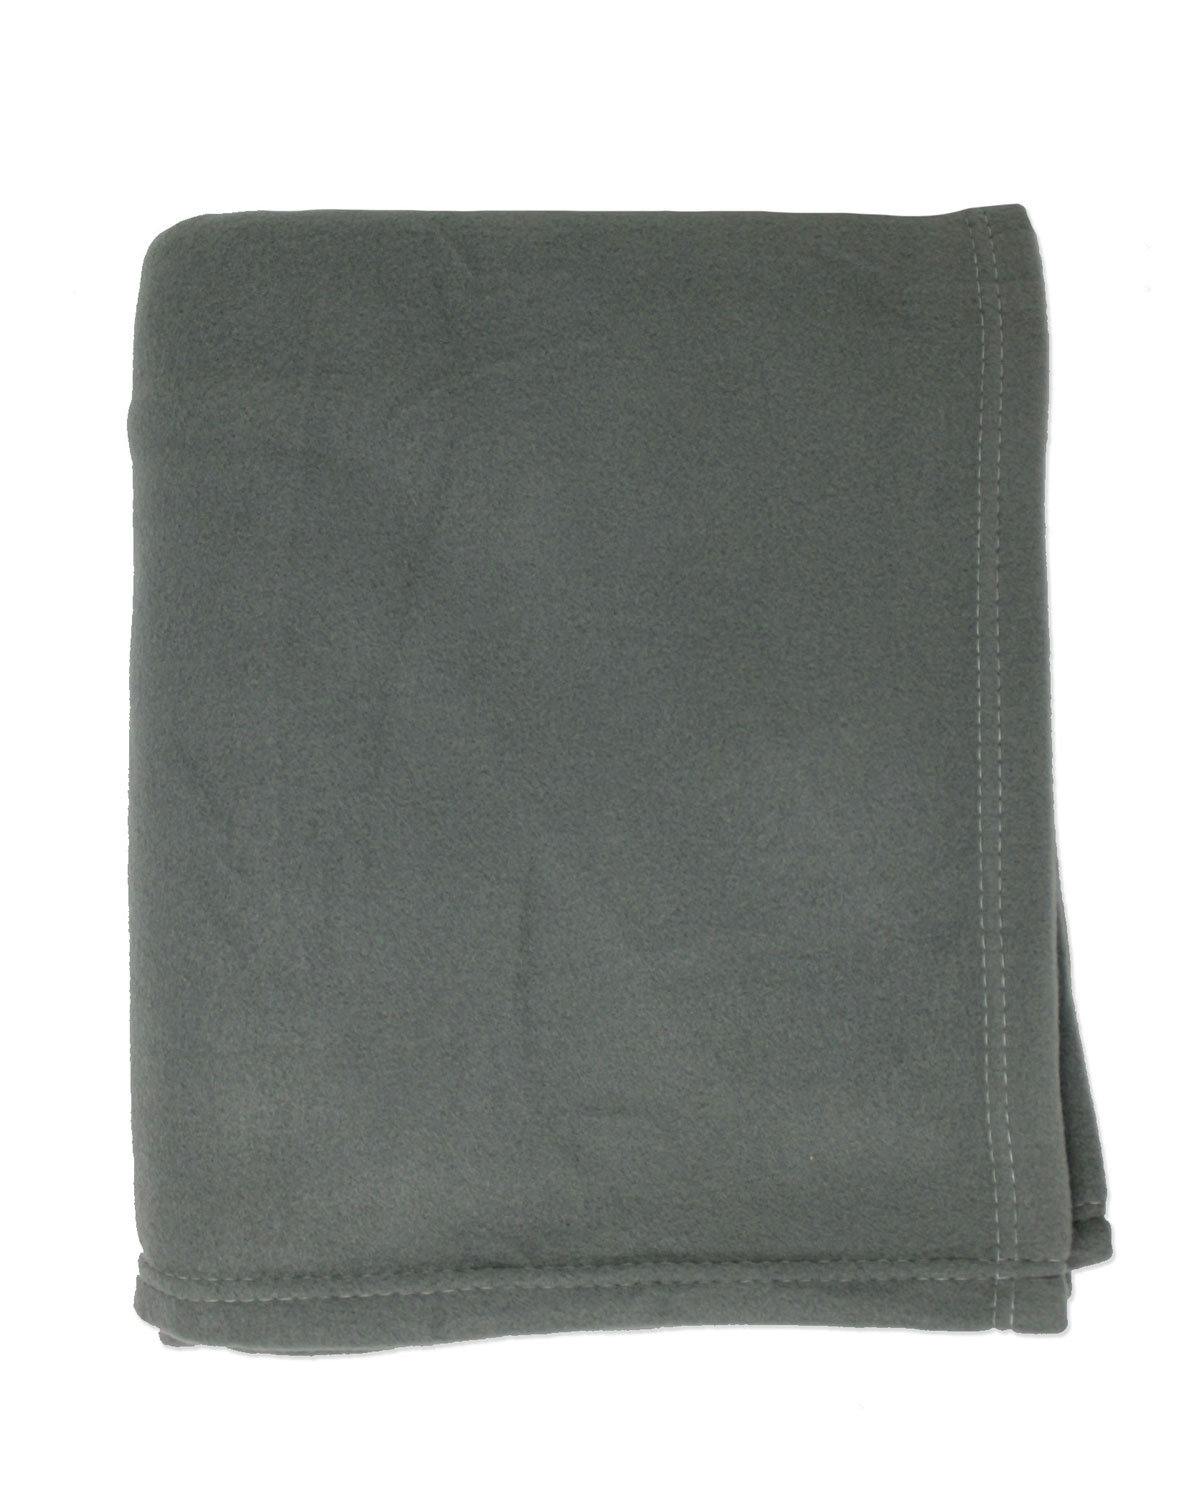 Image for Promo Fleece Blanket